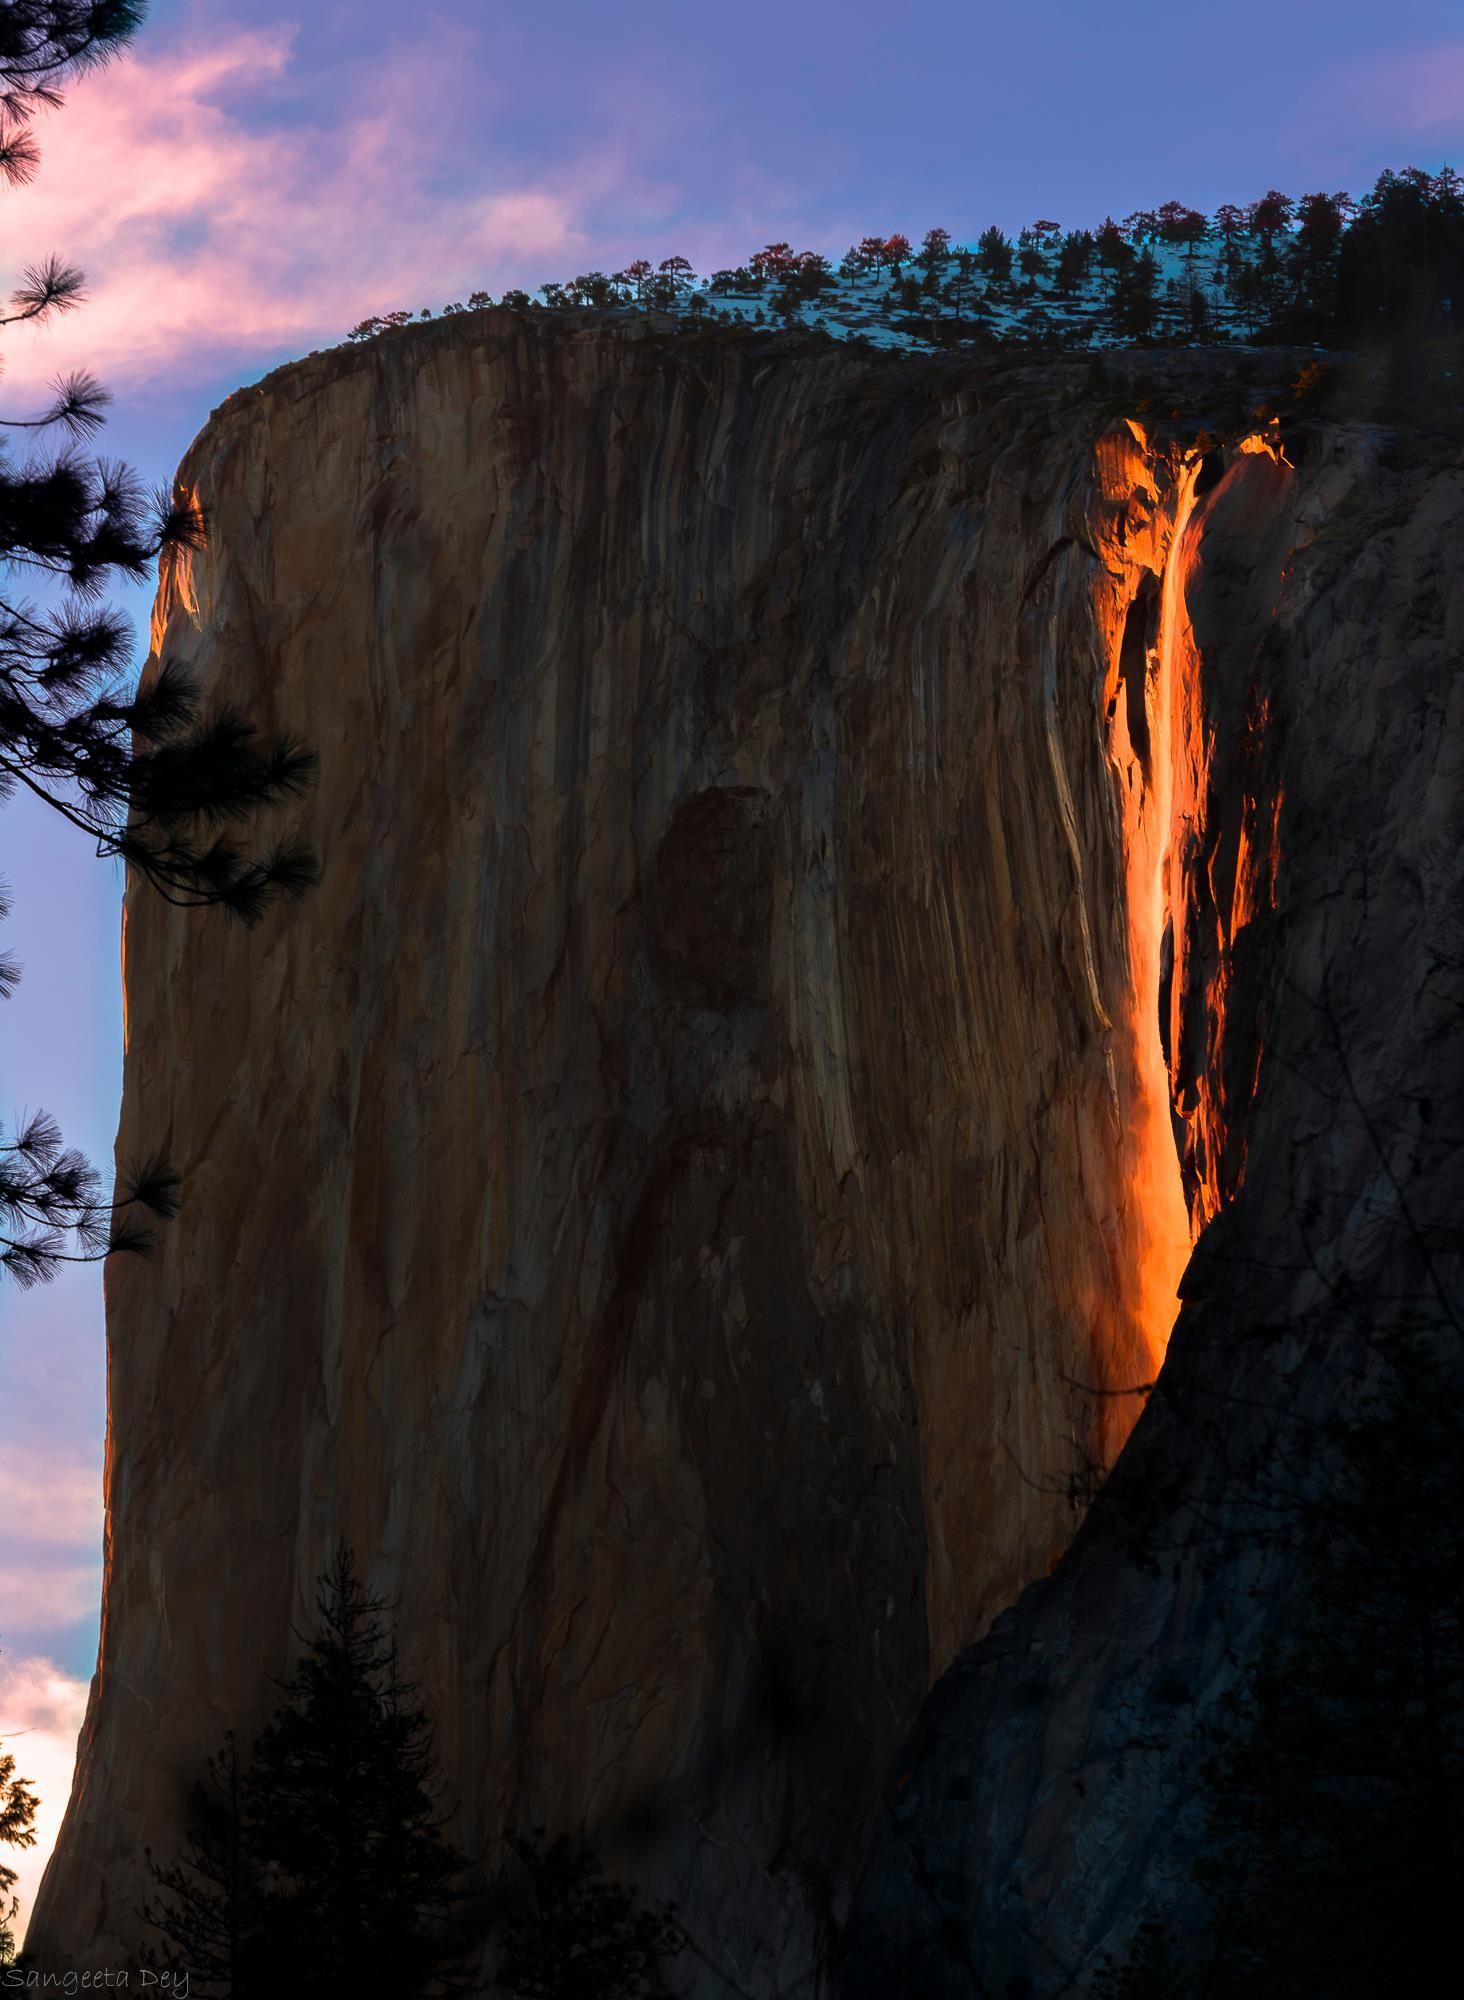 Striking Image of the Rare Yosemite 'Firefall' Phenomenon